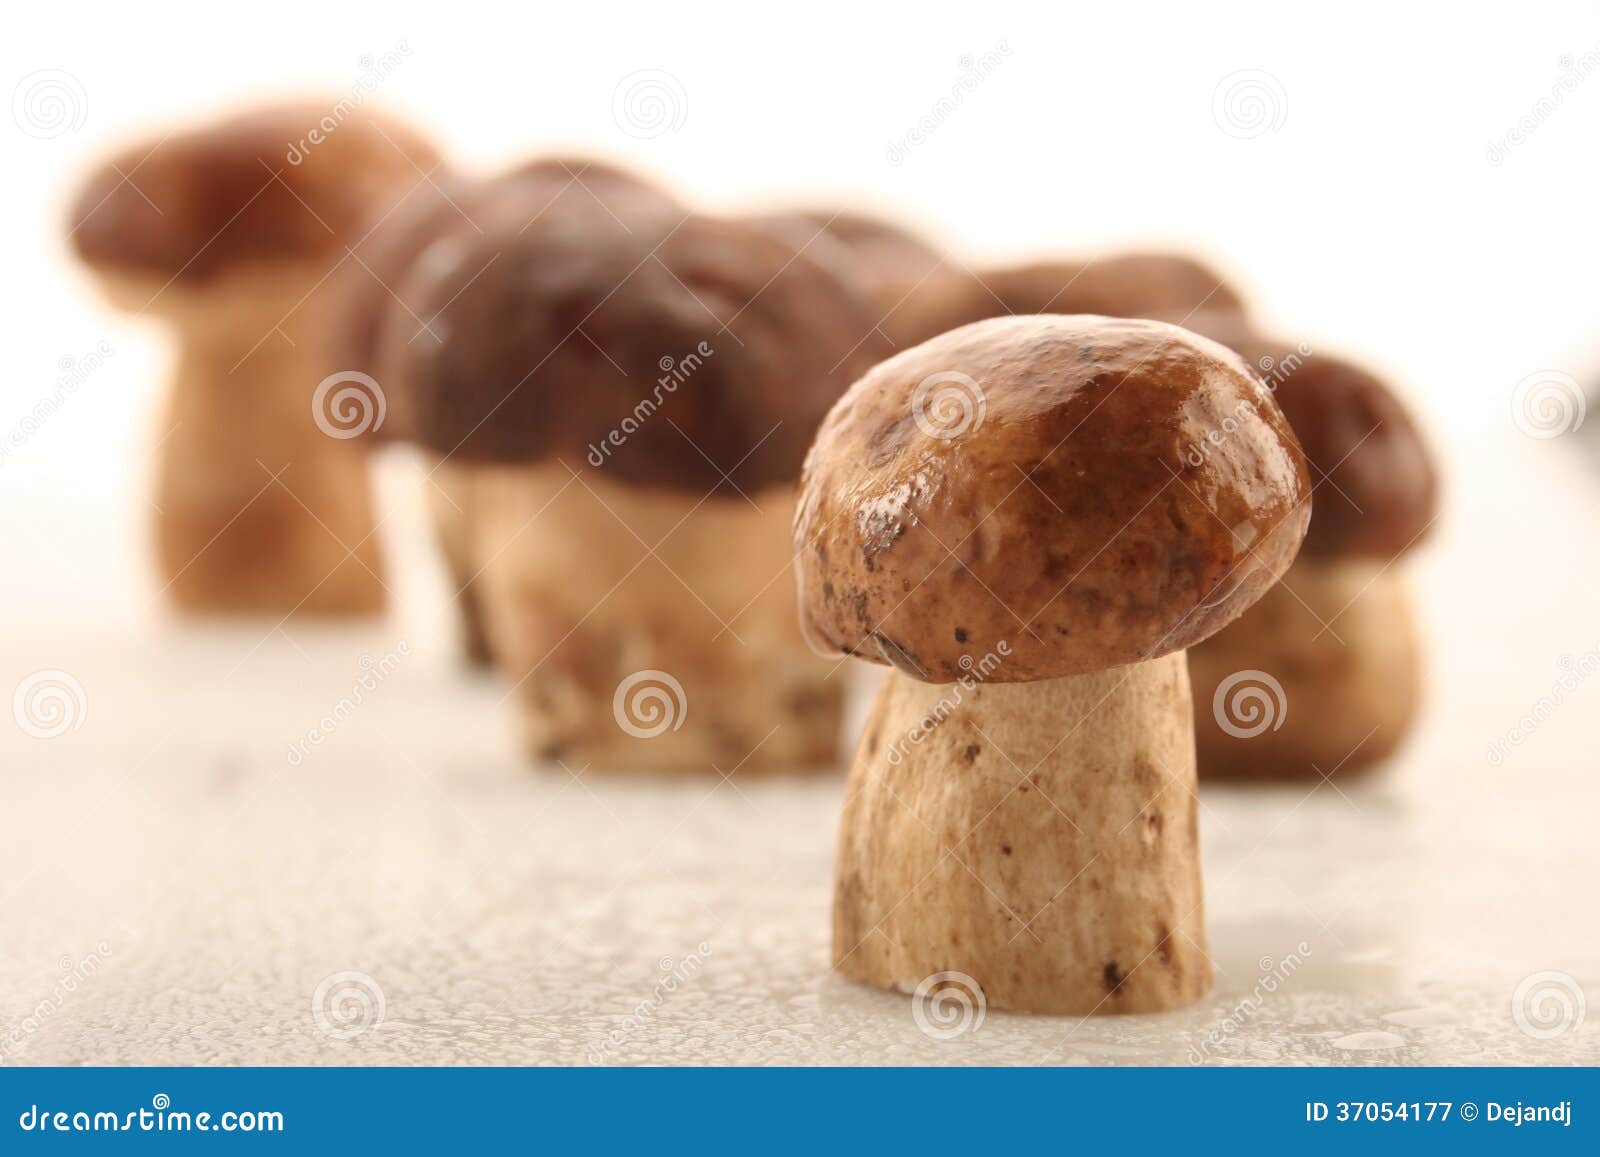 Boletus edulis cutting. Cuting Mushroom, boletus edulis, vrganj, porcini ,shroom, bukovaca pecurka from serbia forest